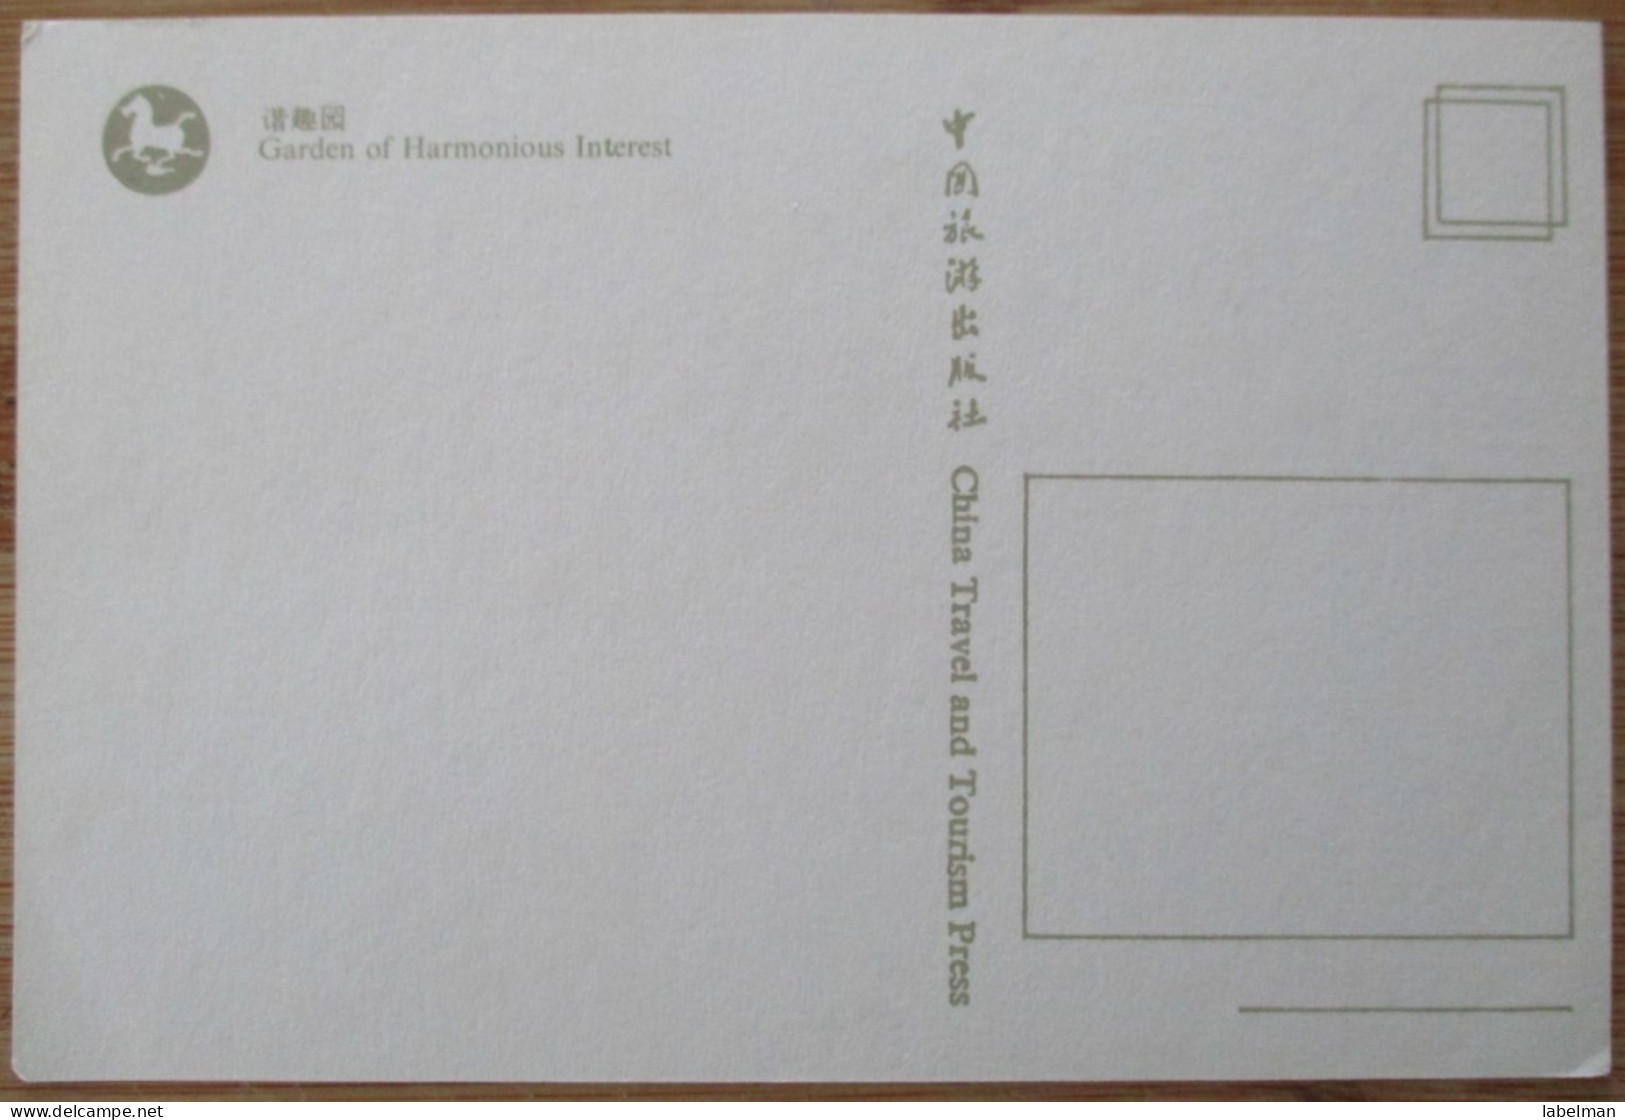 CHINA PEOPLES REPUBLIC XIEQUYUAN GARDEN HARMONIOUS INTERES POSTCARD ANSICHTSKARTE CARTOLINA CARD POSTKARTE CARTE POSTALE - Chine